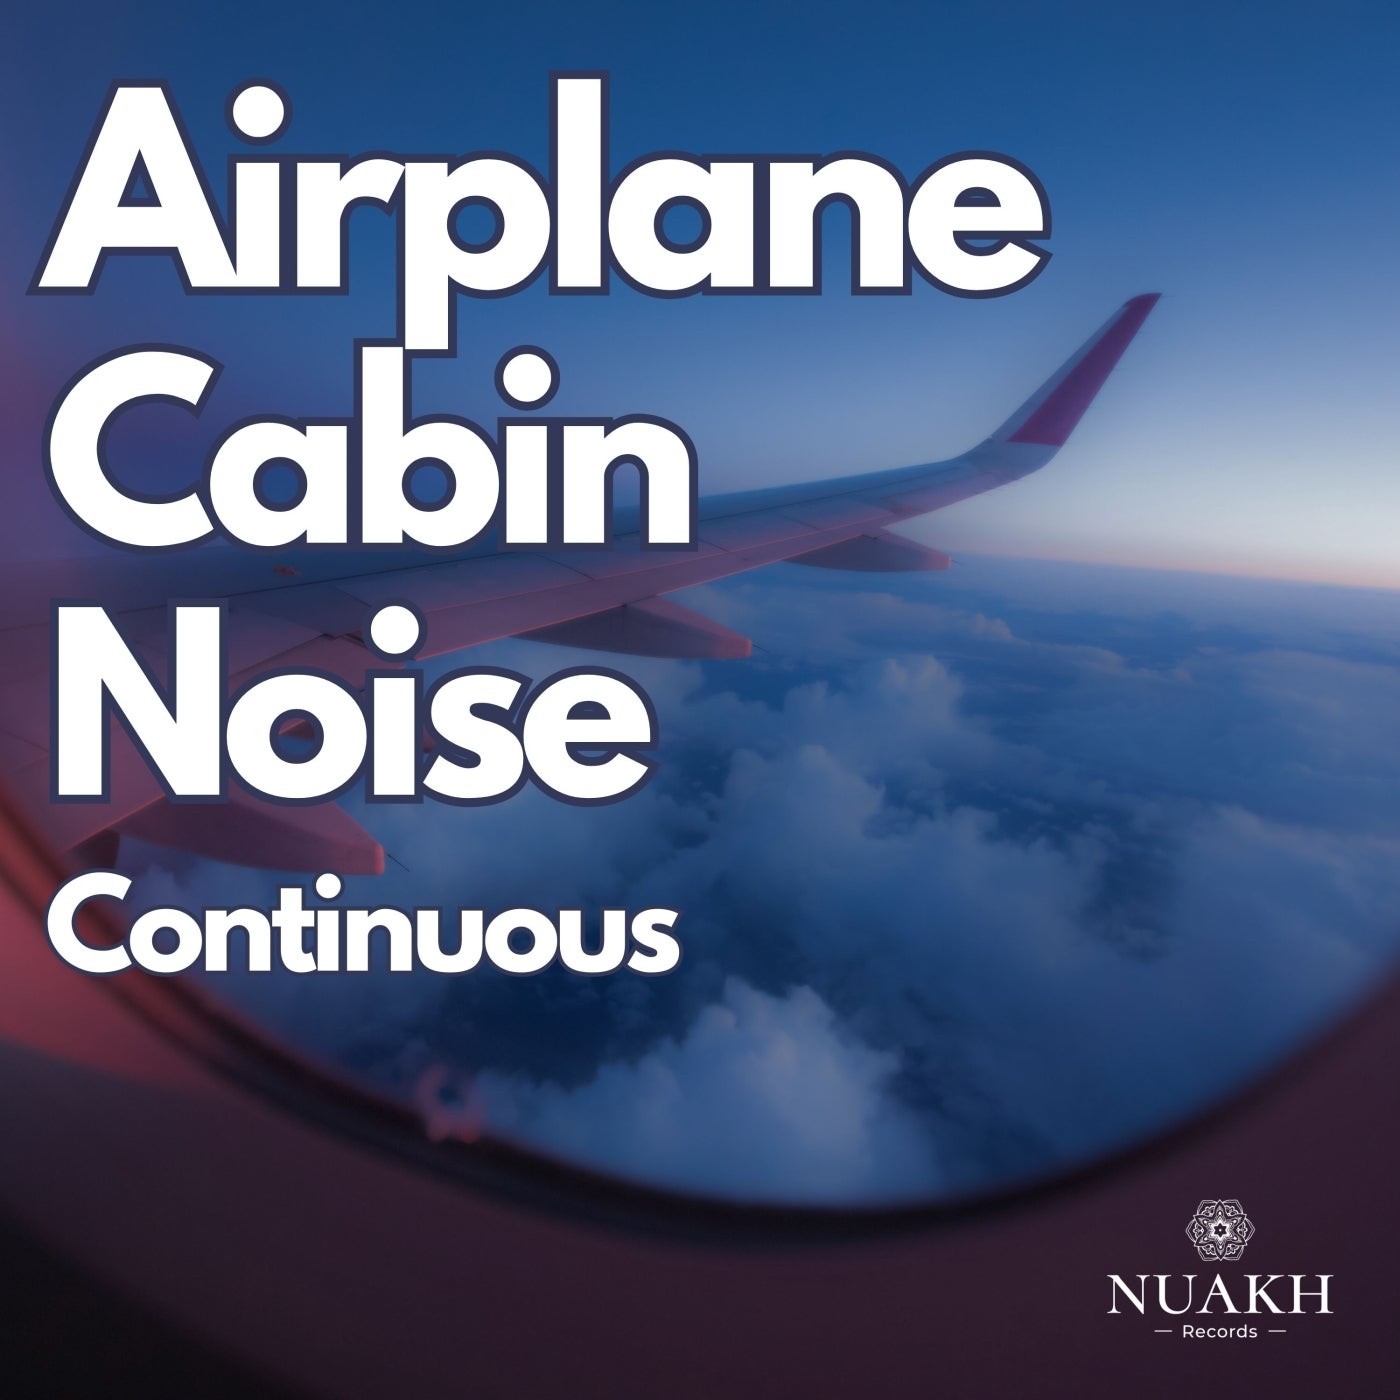 Airplane Cabin Sound for Sleep